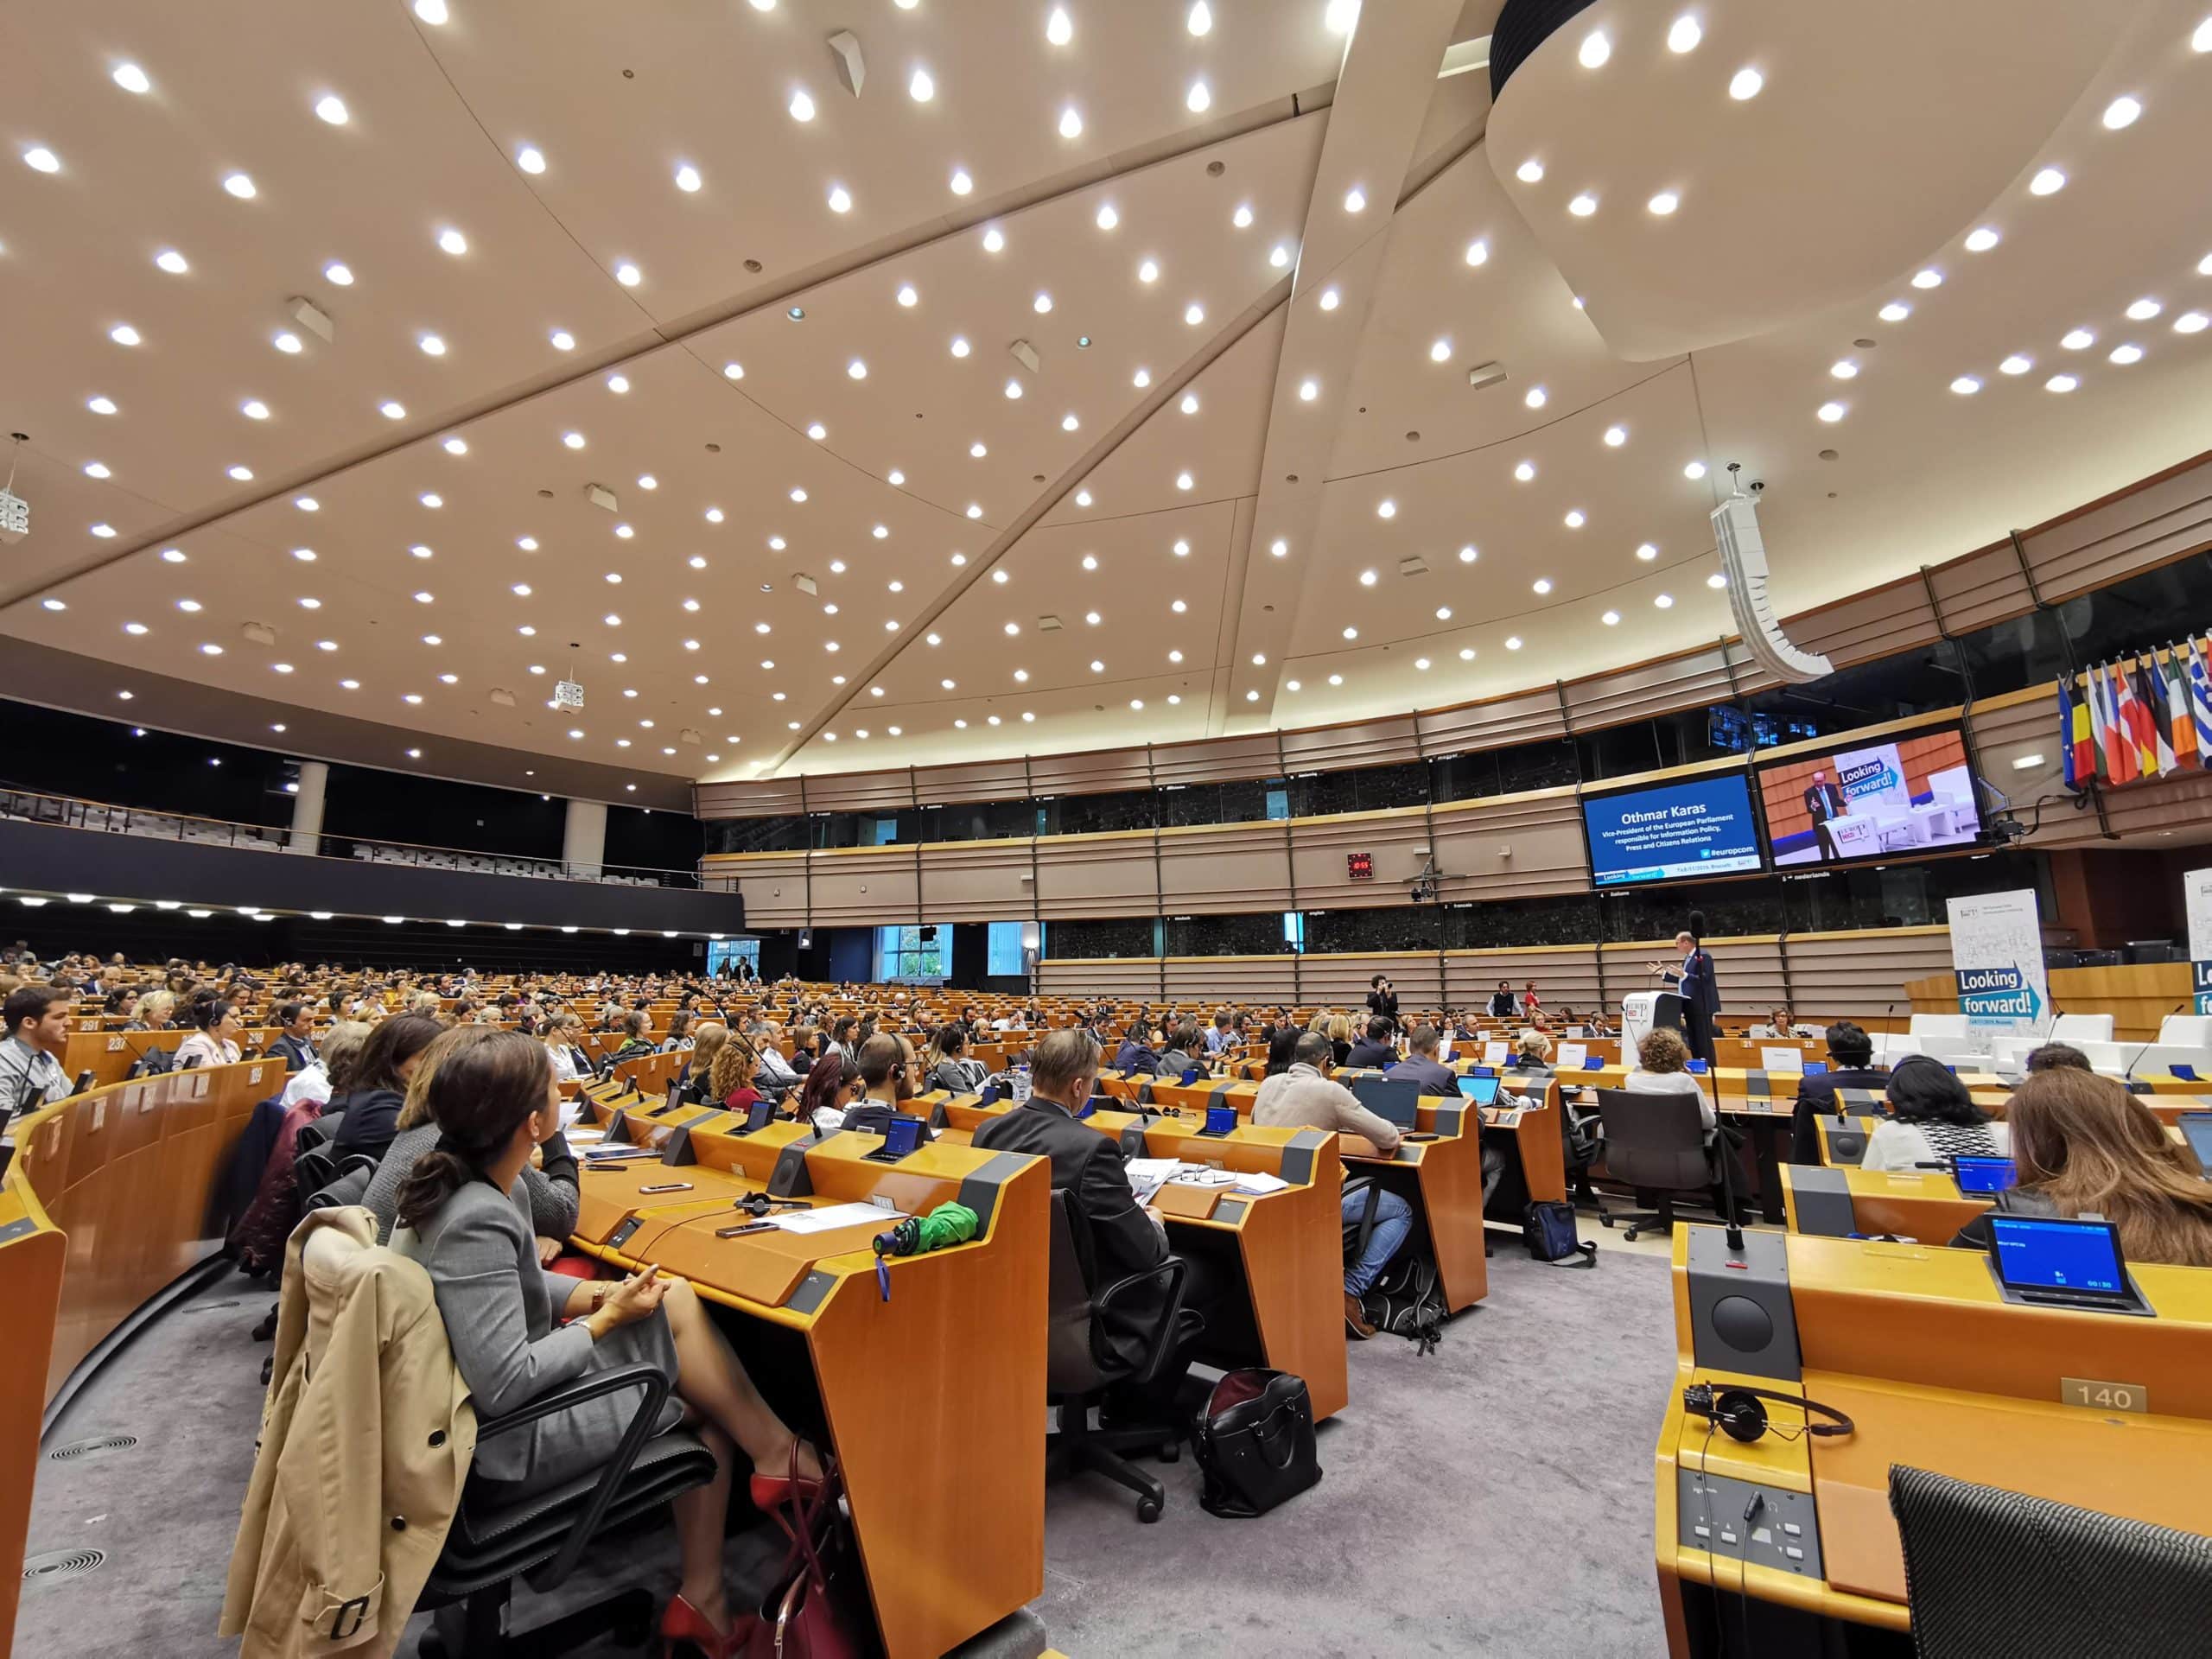 European Parliament hemicycle